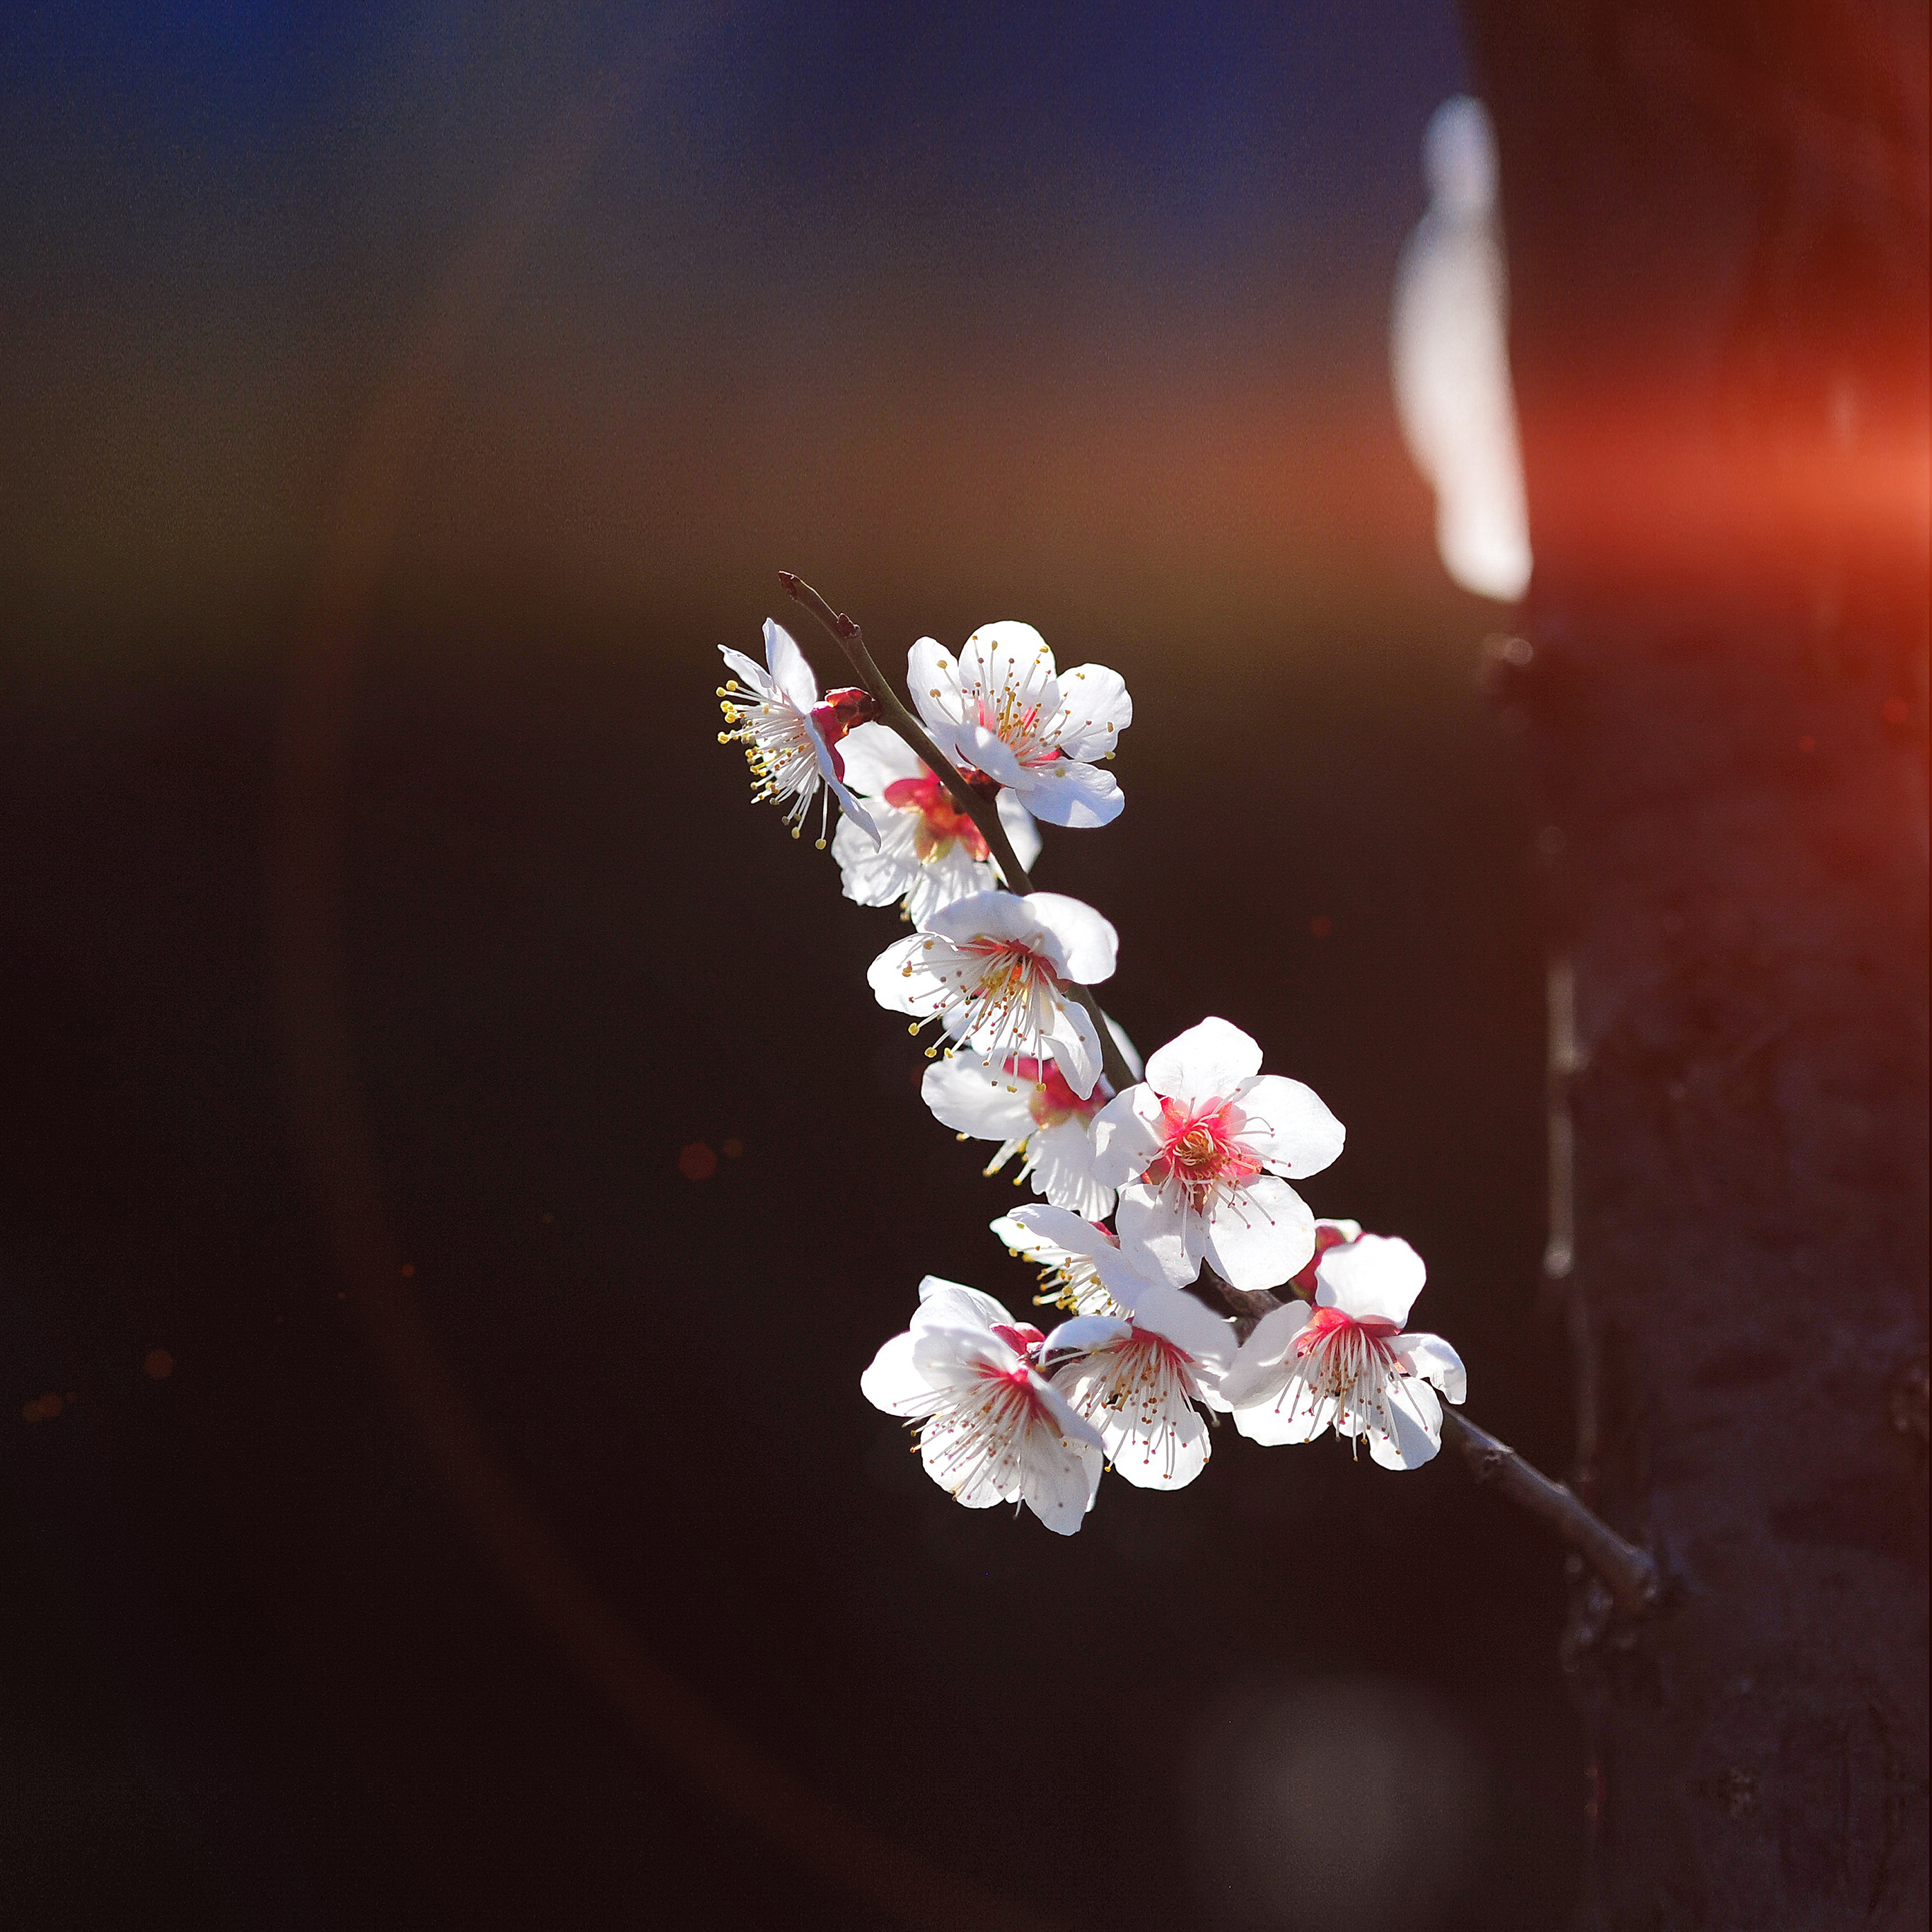 Cherry Blossom Wallpaper Iphone X - HD Wallpaper 